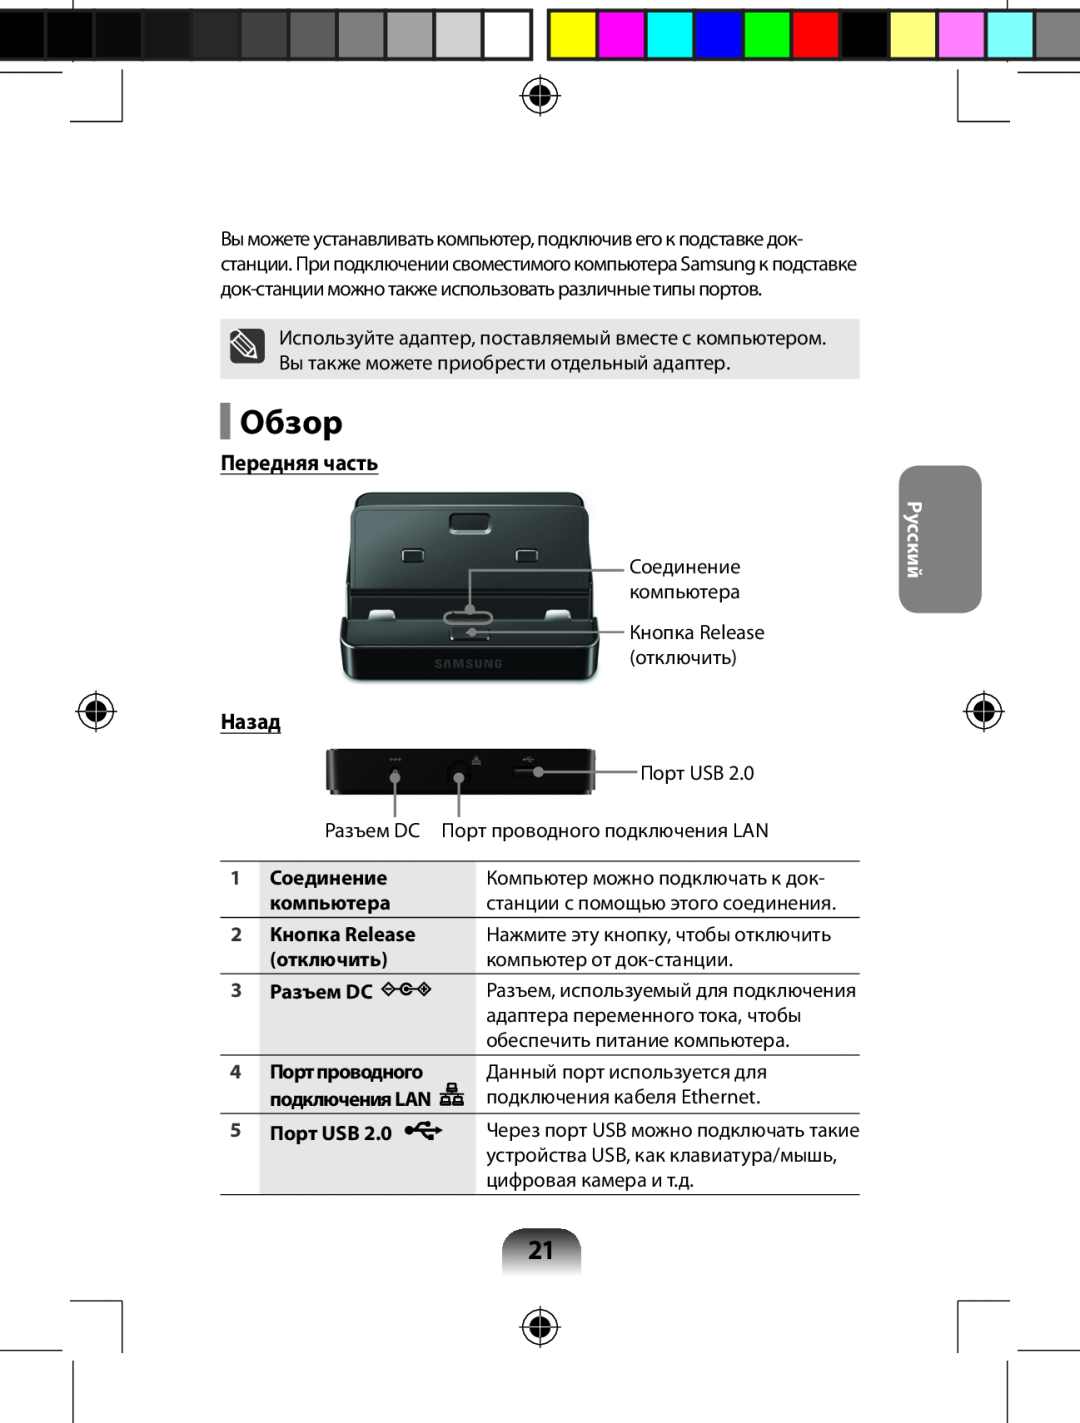 Samsung AA-RD7NMKD/US, AARD7NSDOUS manual Обзор, Передняя часть, Назад, Русский 